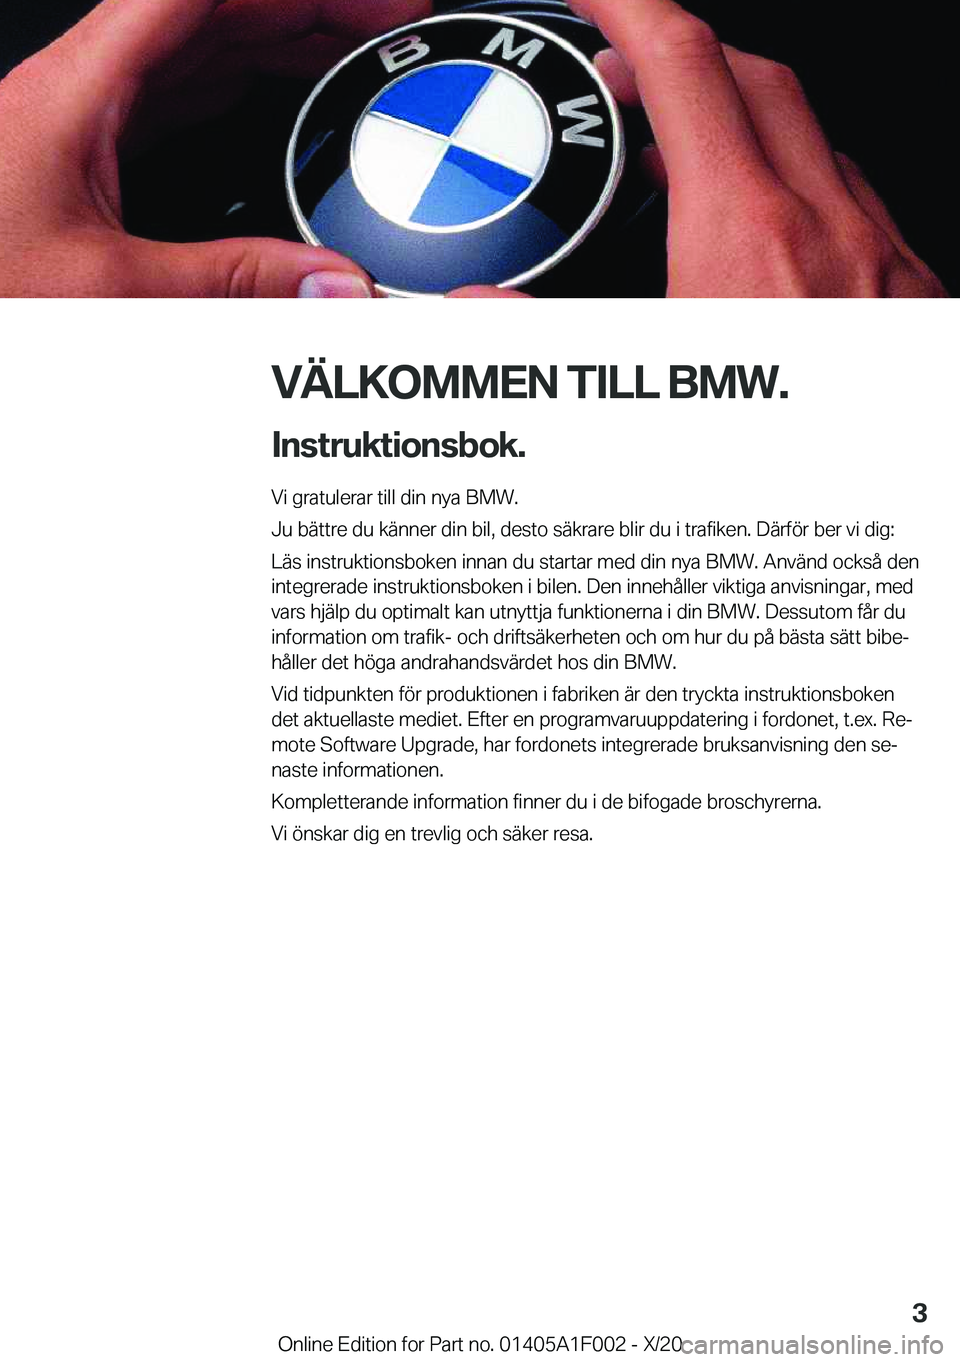 BMW X7 2021  InstruktionsbÖcker (in Swedish) �V�Ä�L�K�O�M�M�E�N��T�I�L�L��B�M�W�.�I�n�s�t�r�u�k�t�i�o�n�s�b�o�k�.
�V�i��g�r�a�t�u�l�e�r�a�r��t�i�l�l��d�i�n��n�y�a��B�M�W�.
�J�u��b�ä�t�t�r�e��d�u��k�ä�n�n�e�r��d�i�n��b�i�l�,��d�e�